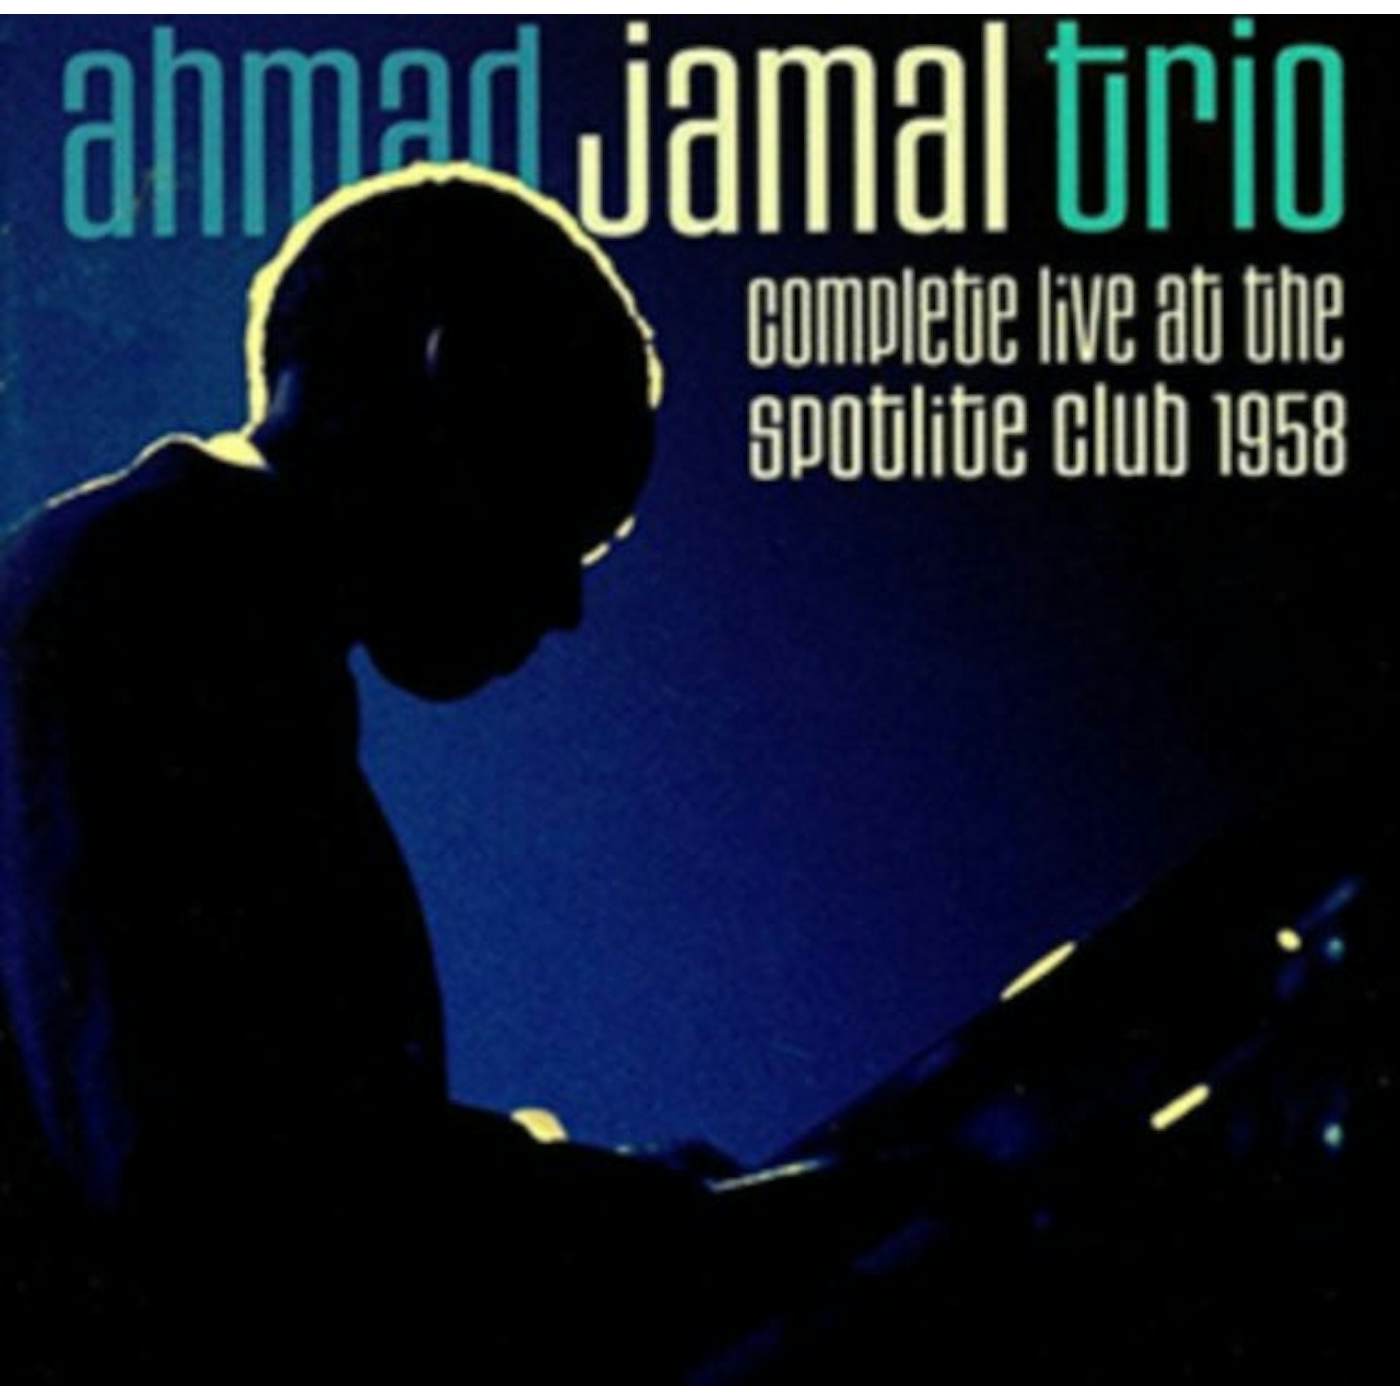 Ahmad Jamal Trio CD - Complete Live At The Spotlite Club 19 58